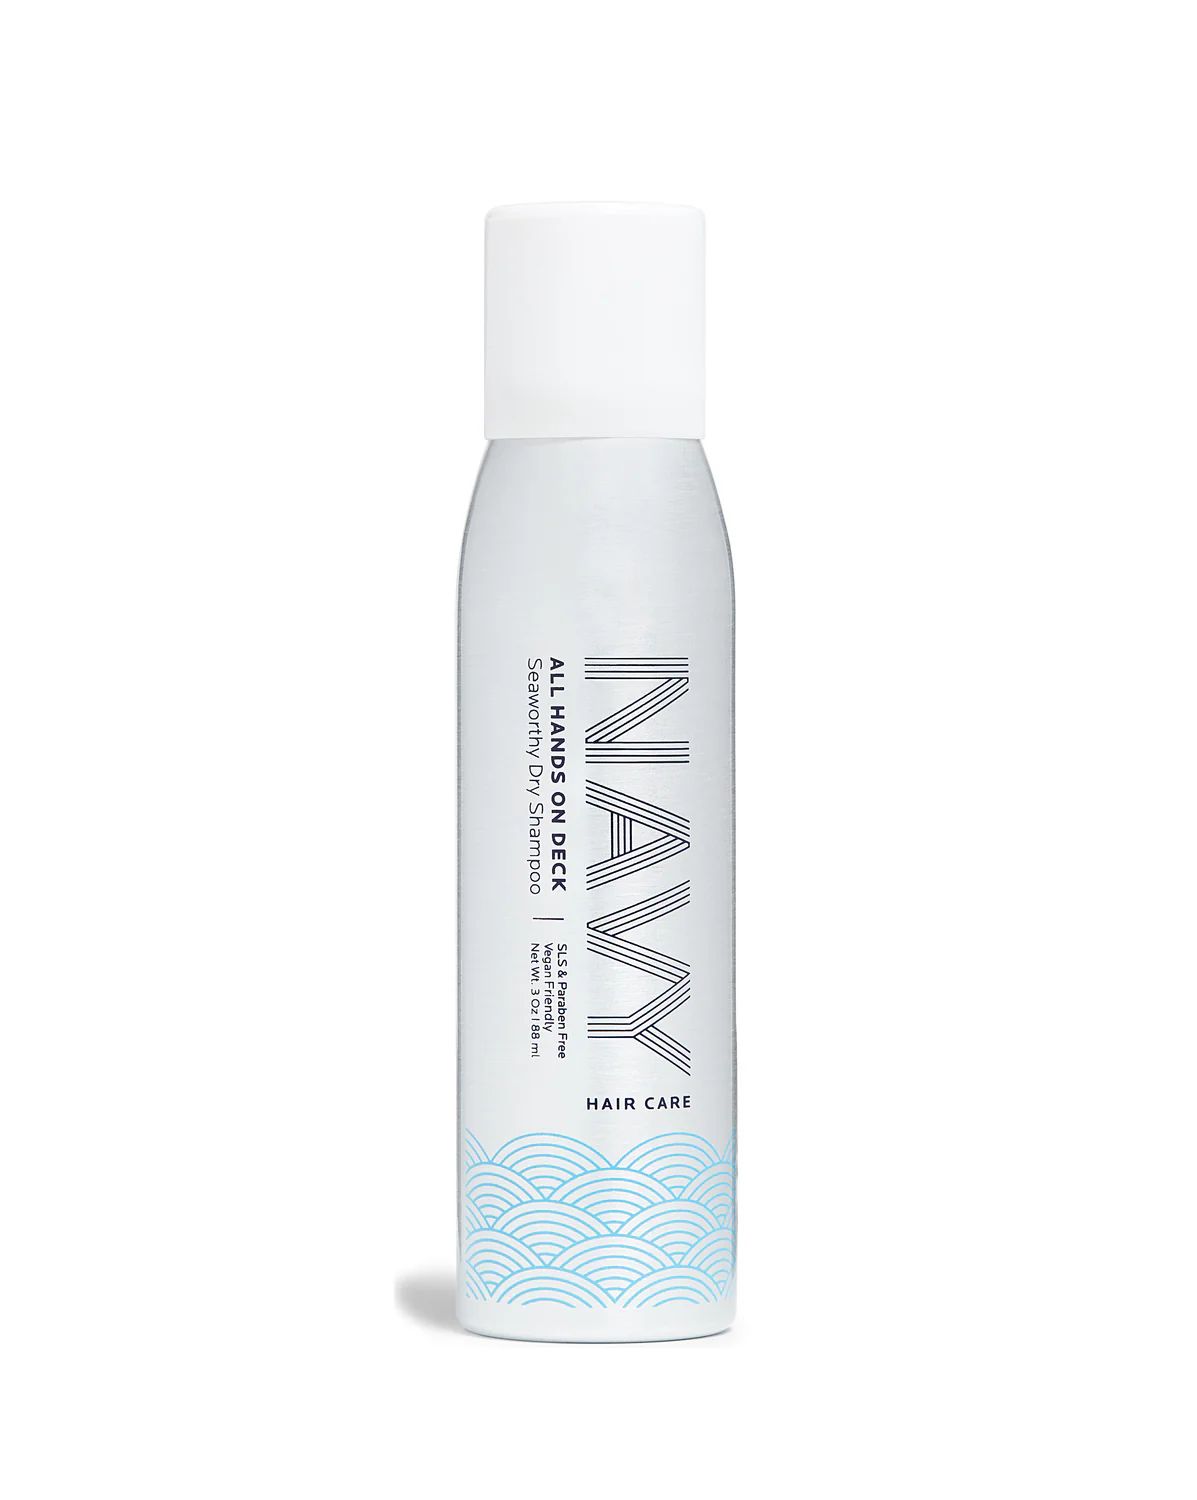 All Hands on Deck - Seaworthy Dry Shampoo | NAVY Hair Care